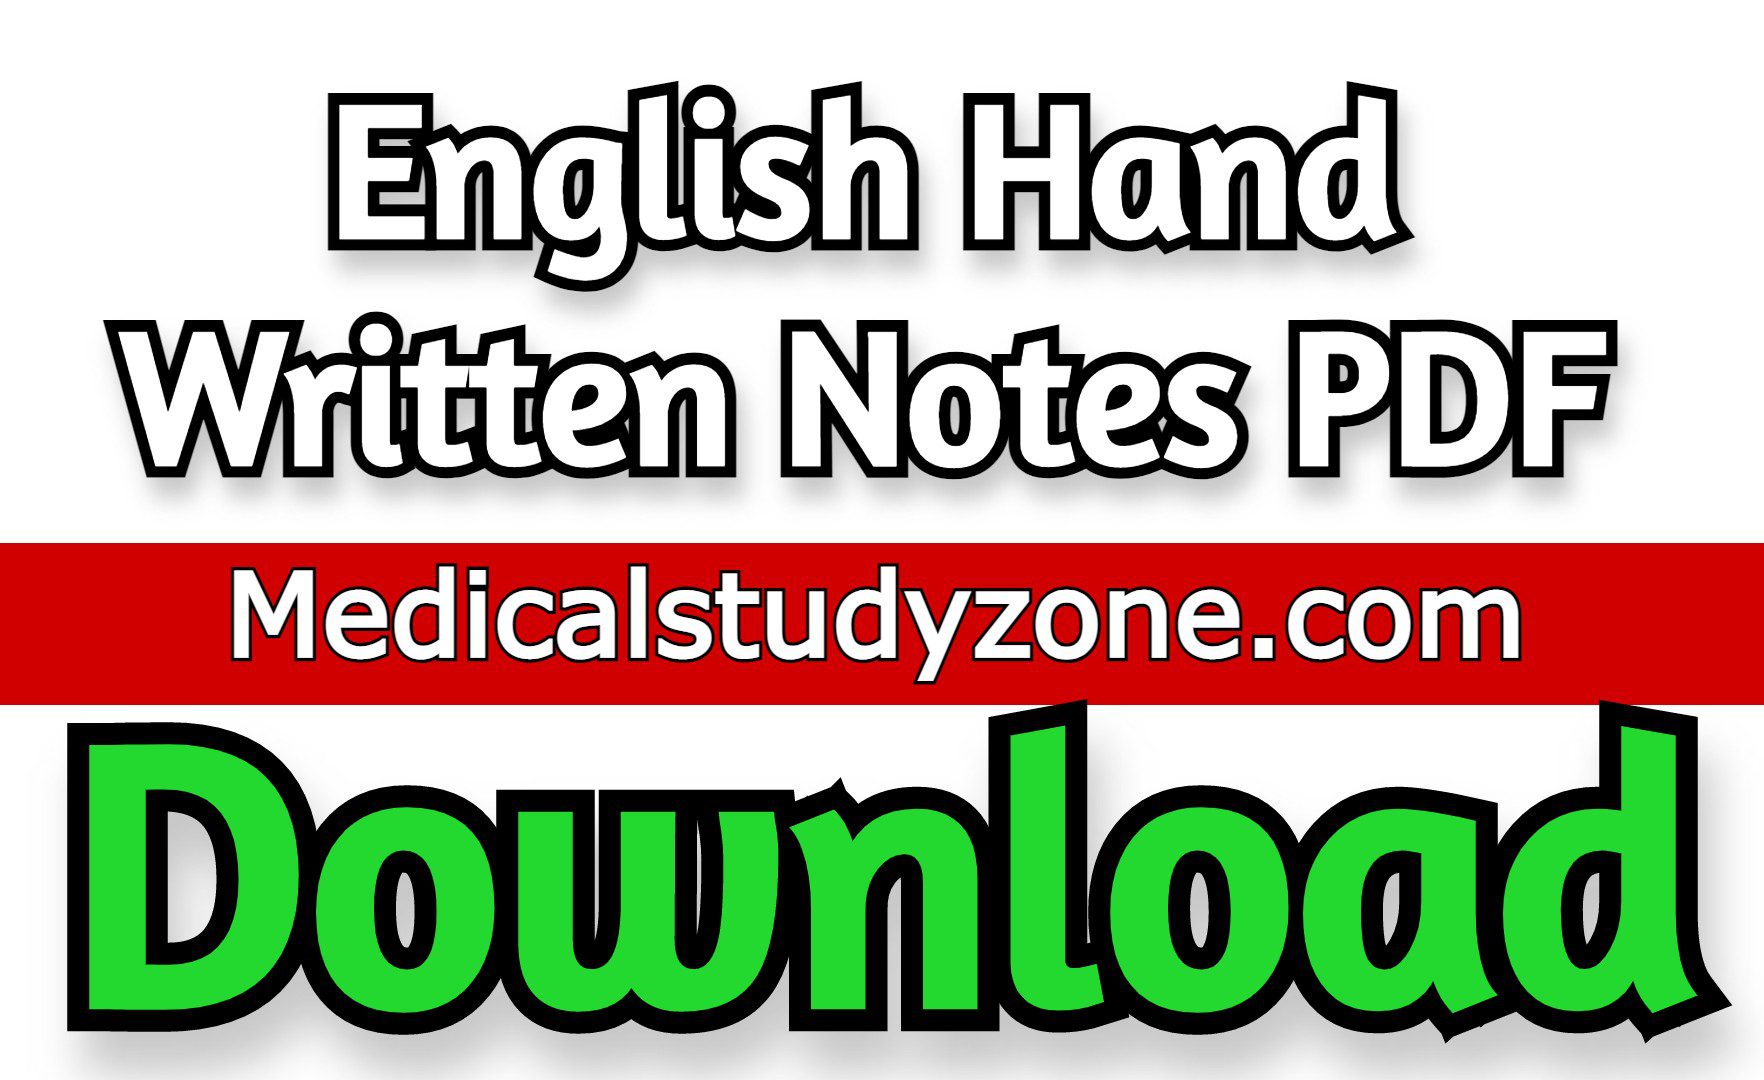 English Hand Written Notes PDF Free Download